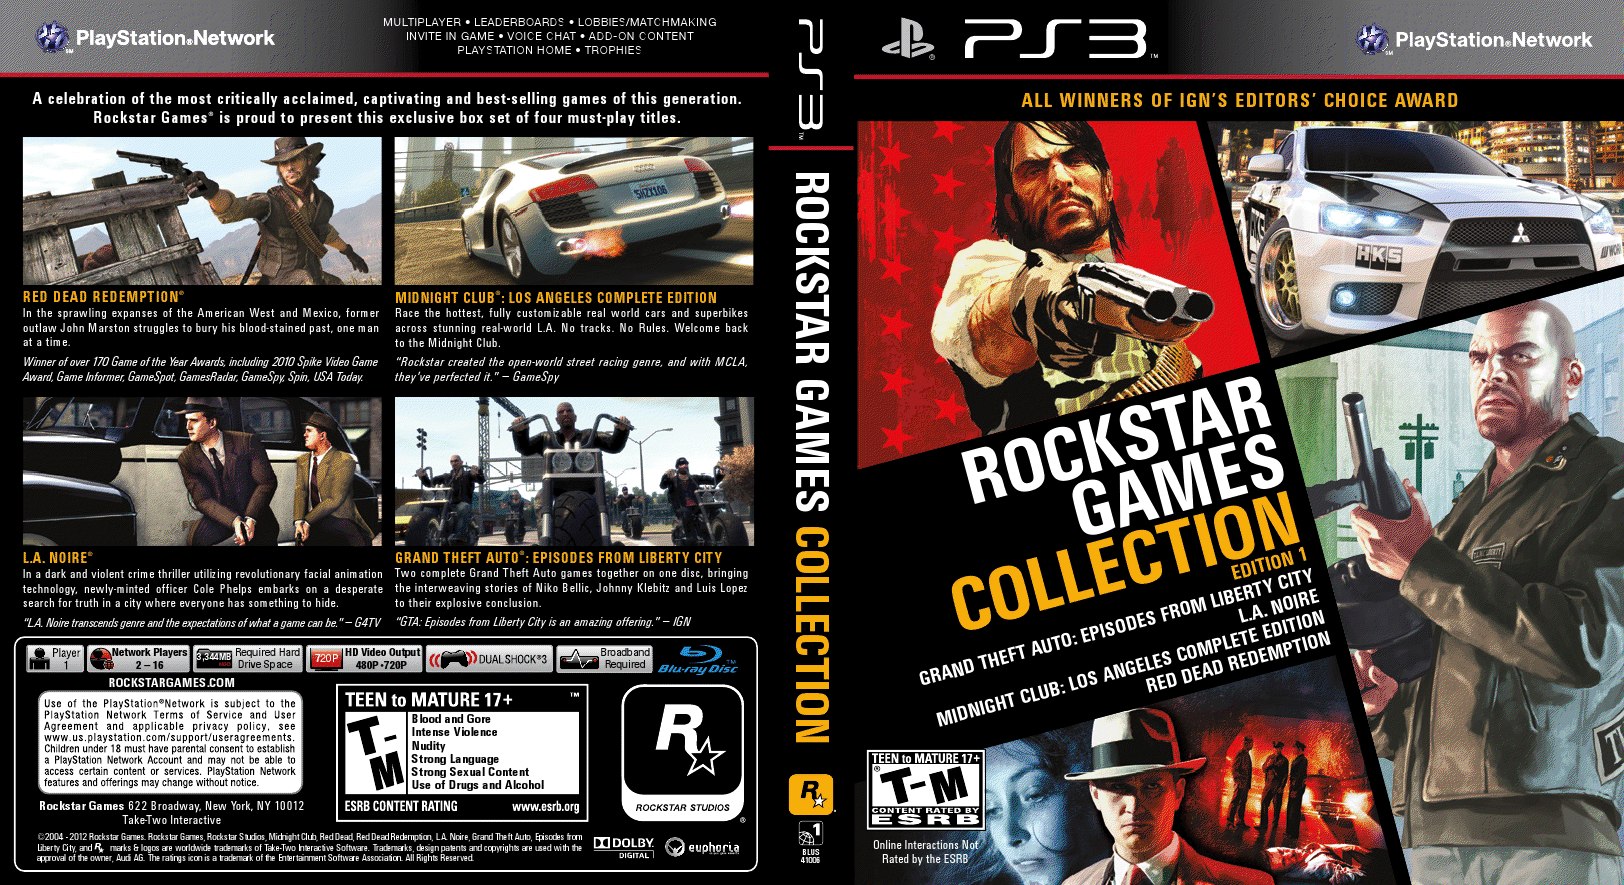 Rockstar Games Collection confirmed - GameSpot